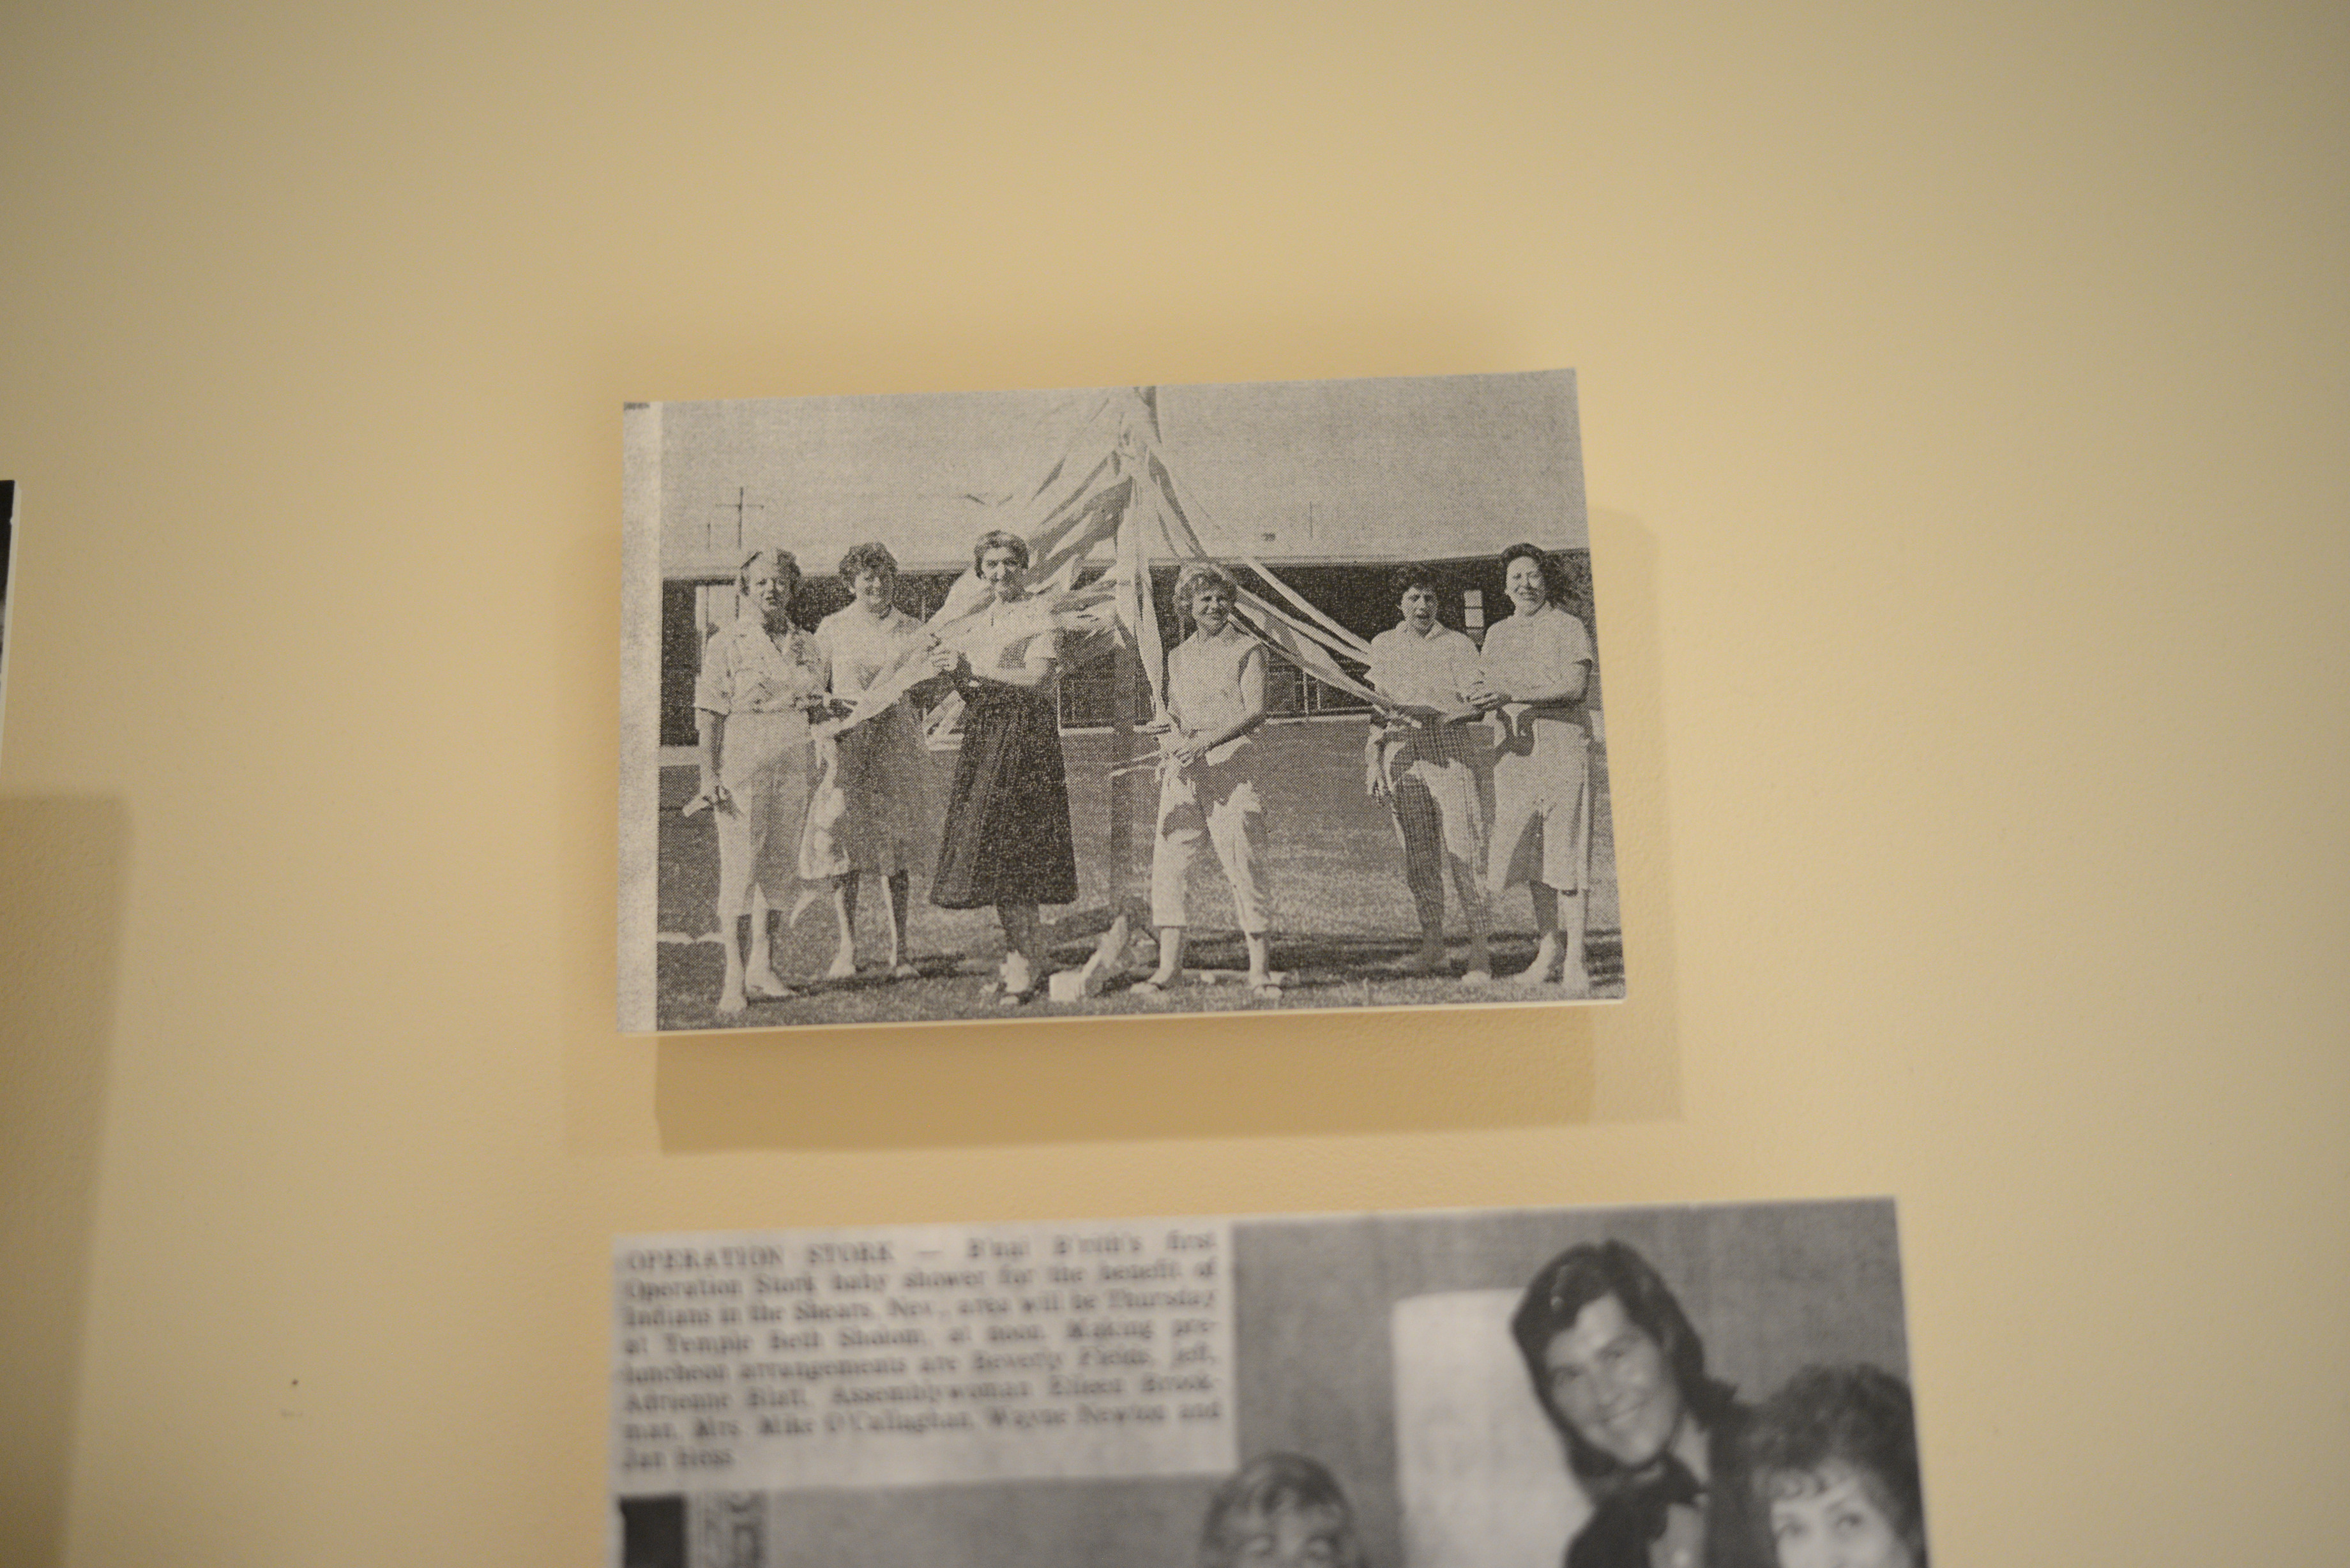 Photograph of women around a maypole